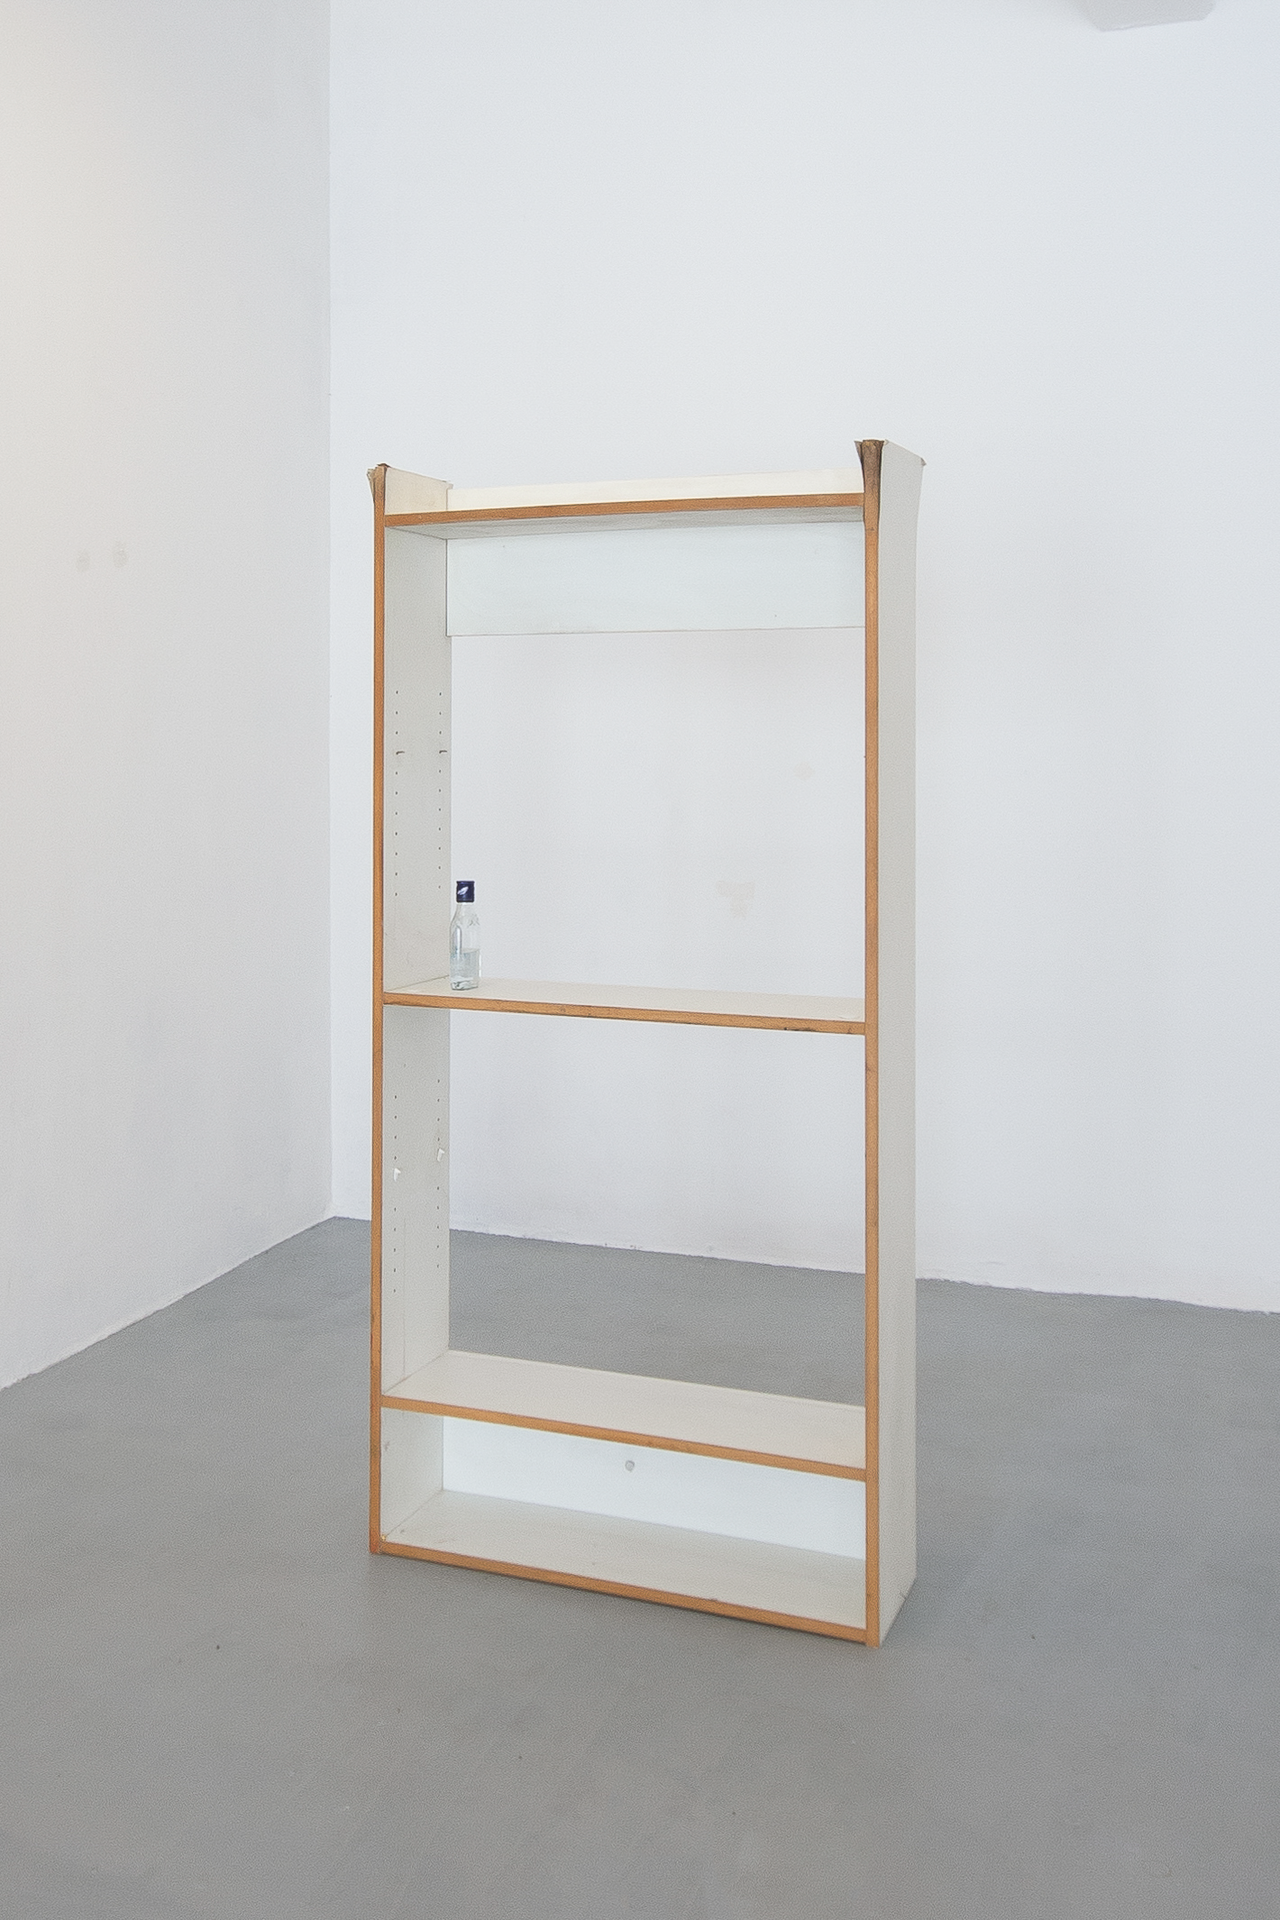 Hugo Bausch Belbachir, Untitled (Cabinet), Wood cabinet, Poliakov #ask, 170 x 70 x 25 cm, 66 7/8 x 27 1/2 x 9 7/8 inches.